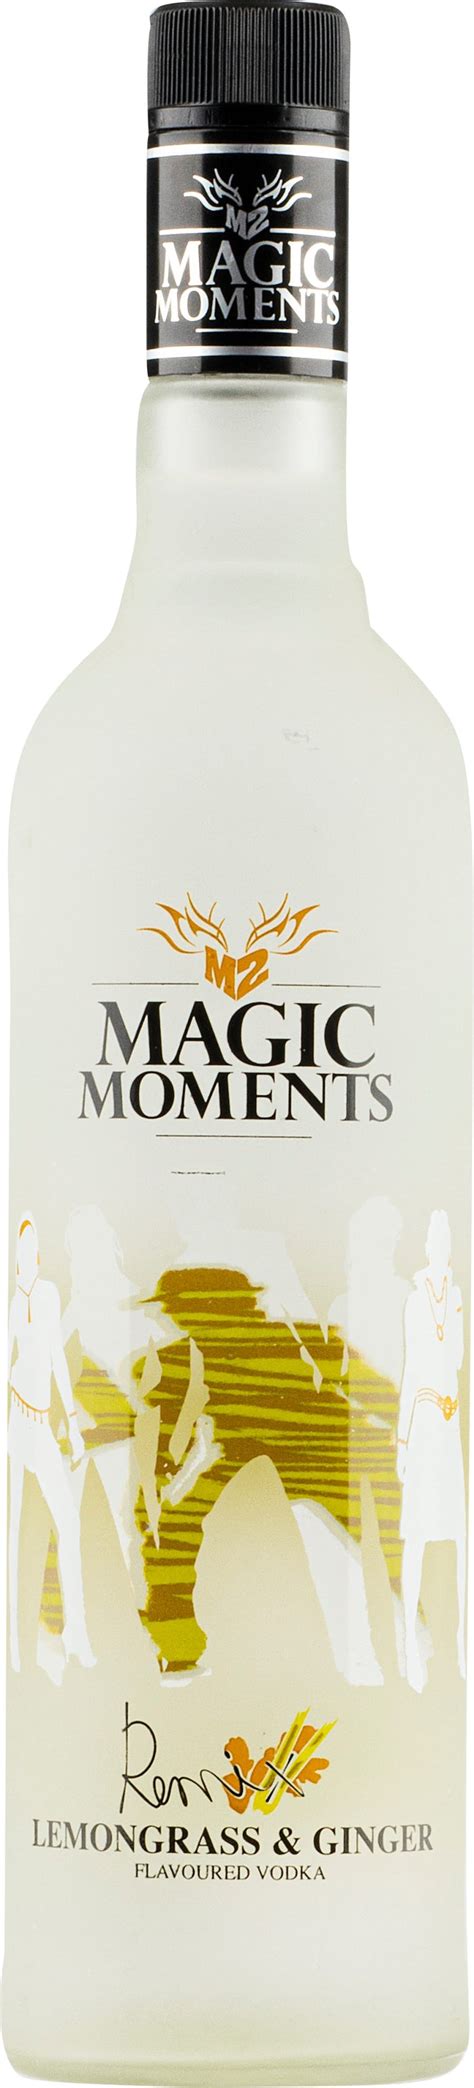 [buy] magic moments remix lemongrass and ginger vodka at